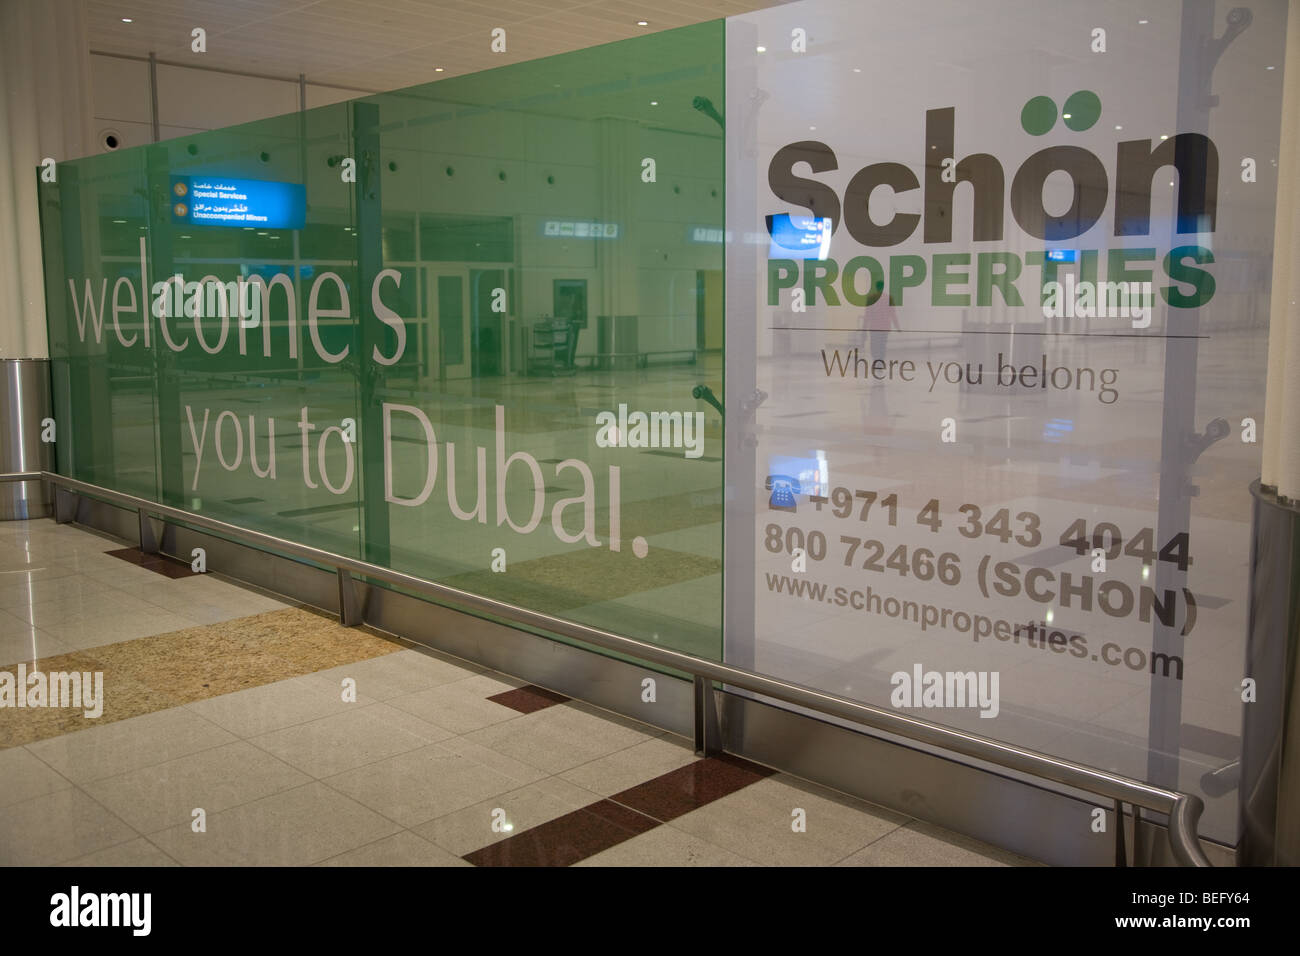 Welcome to Dubai sign dubai airport arrivals hall Stock Photo